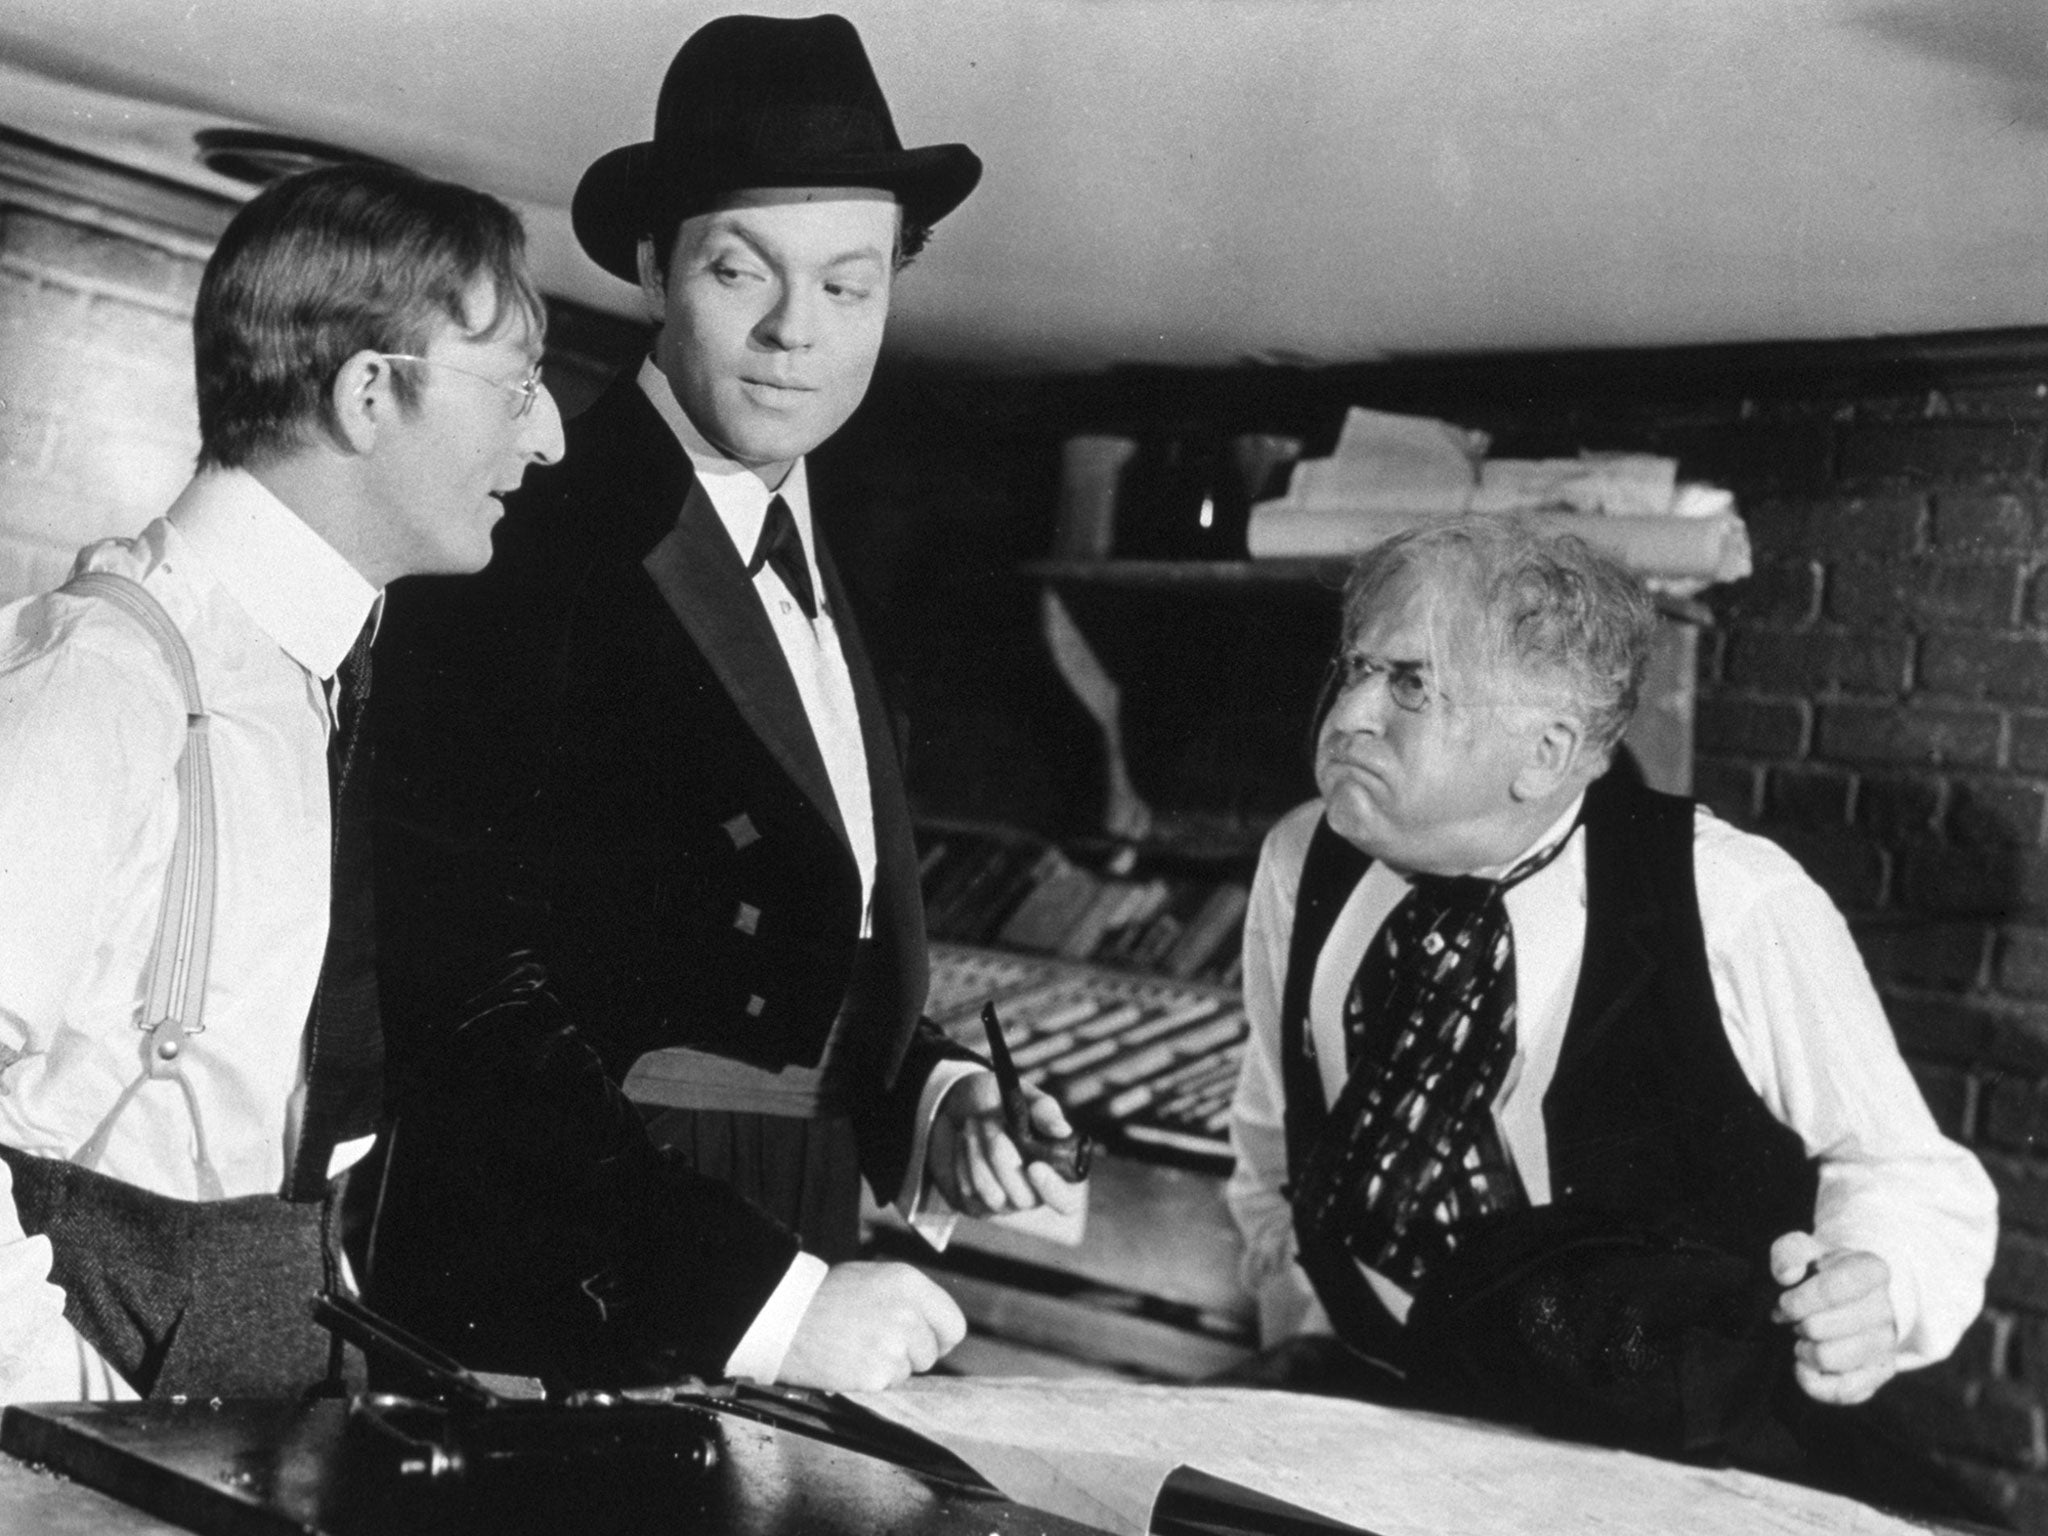 Bygone era: Orson Welles, centre, in Citizen Kane